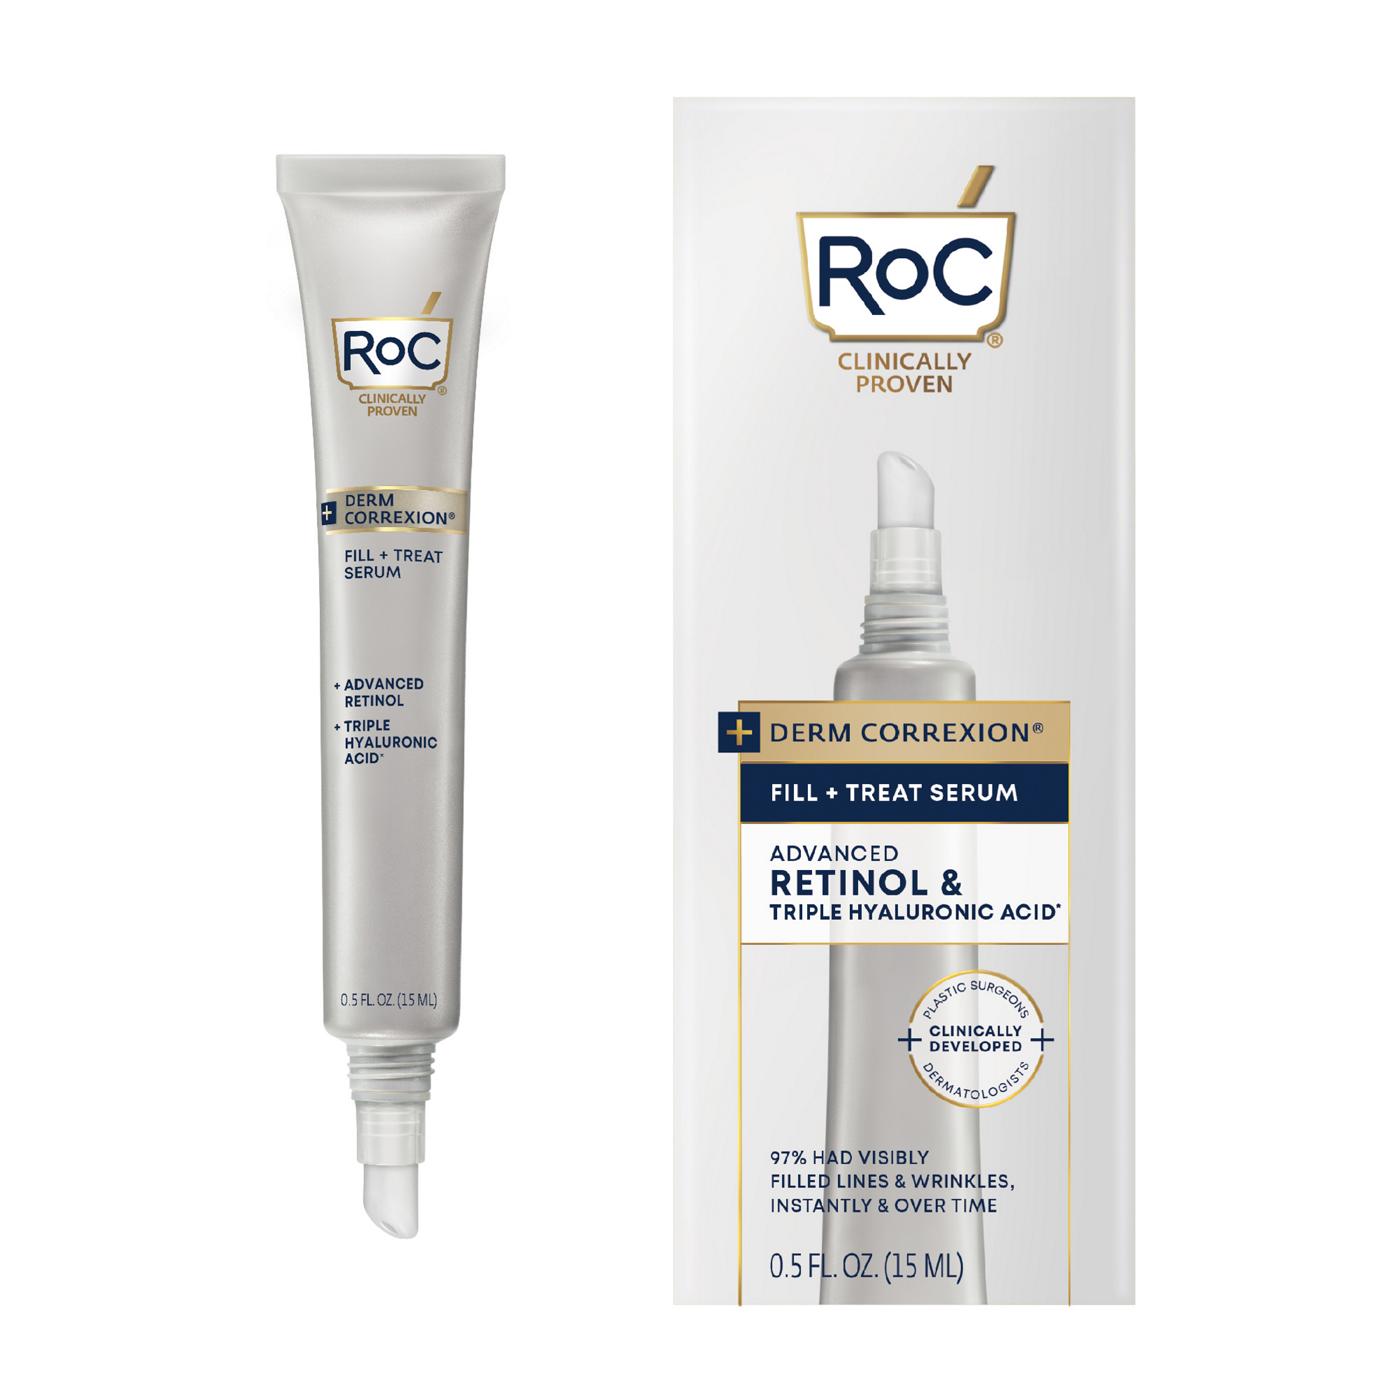 RoC Derm Correxion Advanced Retinol + Triple Hyaluronic Acid Serum; image 4 of 5